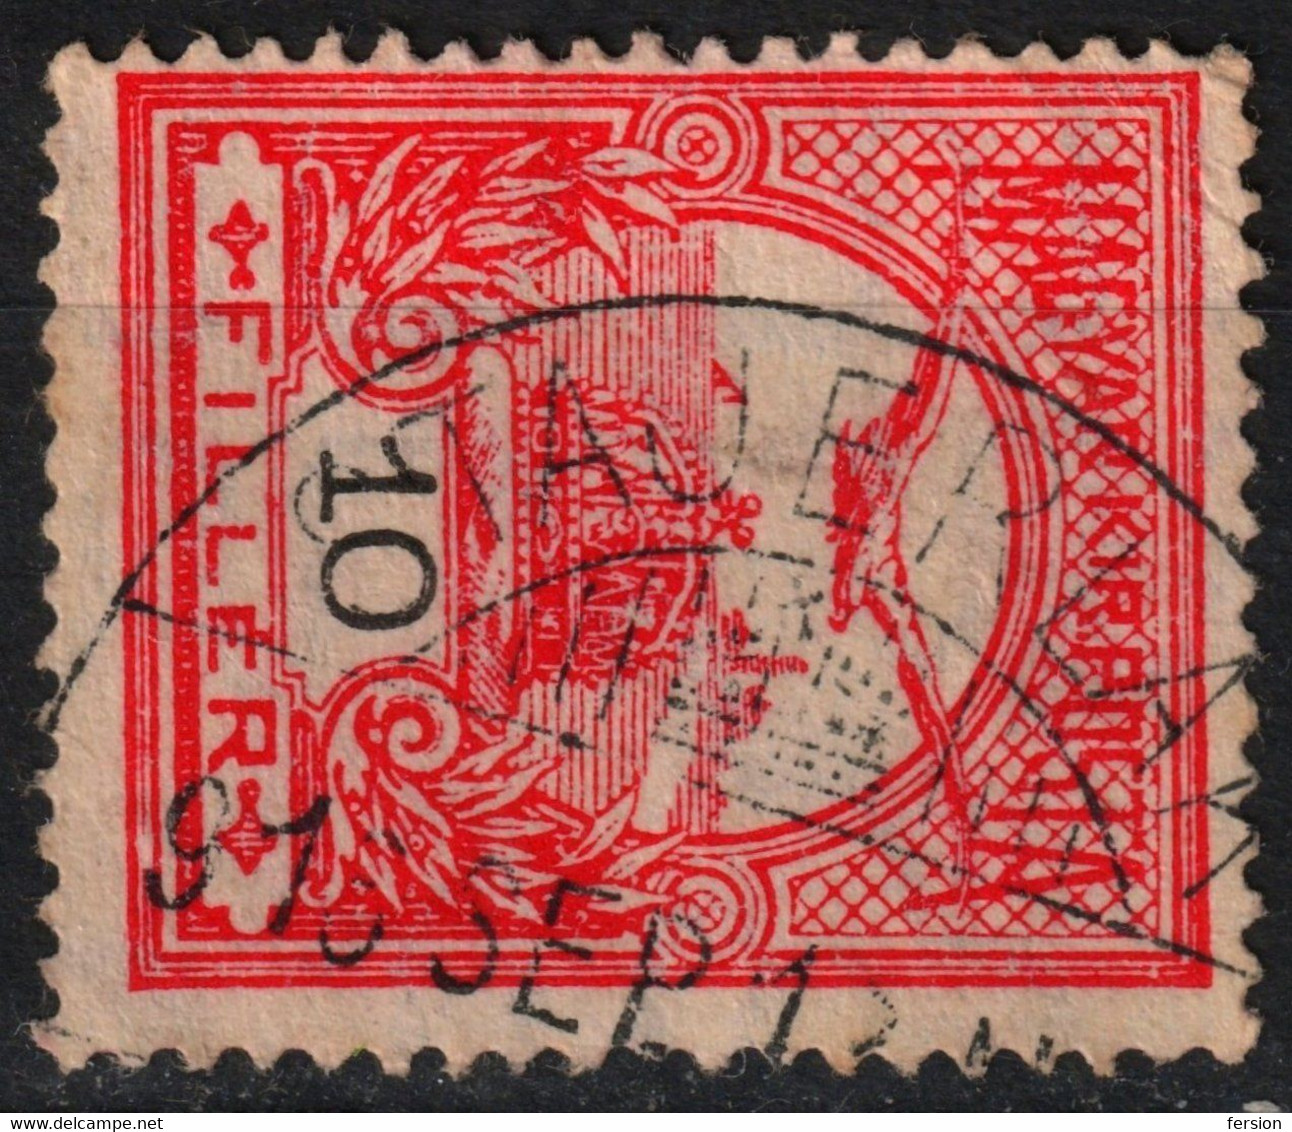 Stájerlak Steierdorf Crown Postmark / TURUL WMK 7. 1915 Hungary Romania Transylvania Caraș-Severin Banat KuK - 10 Fill - Transylvania